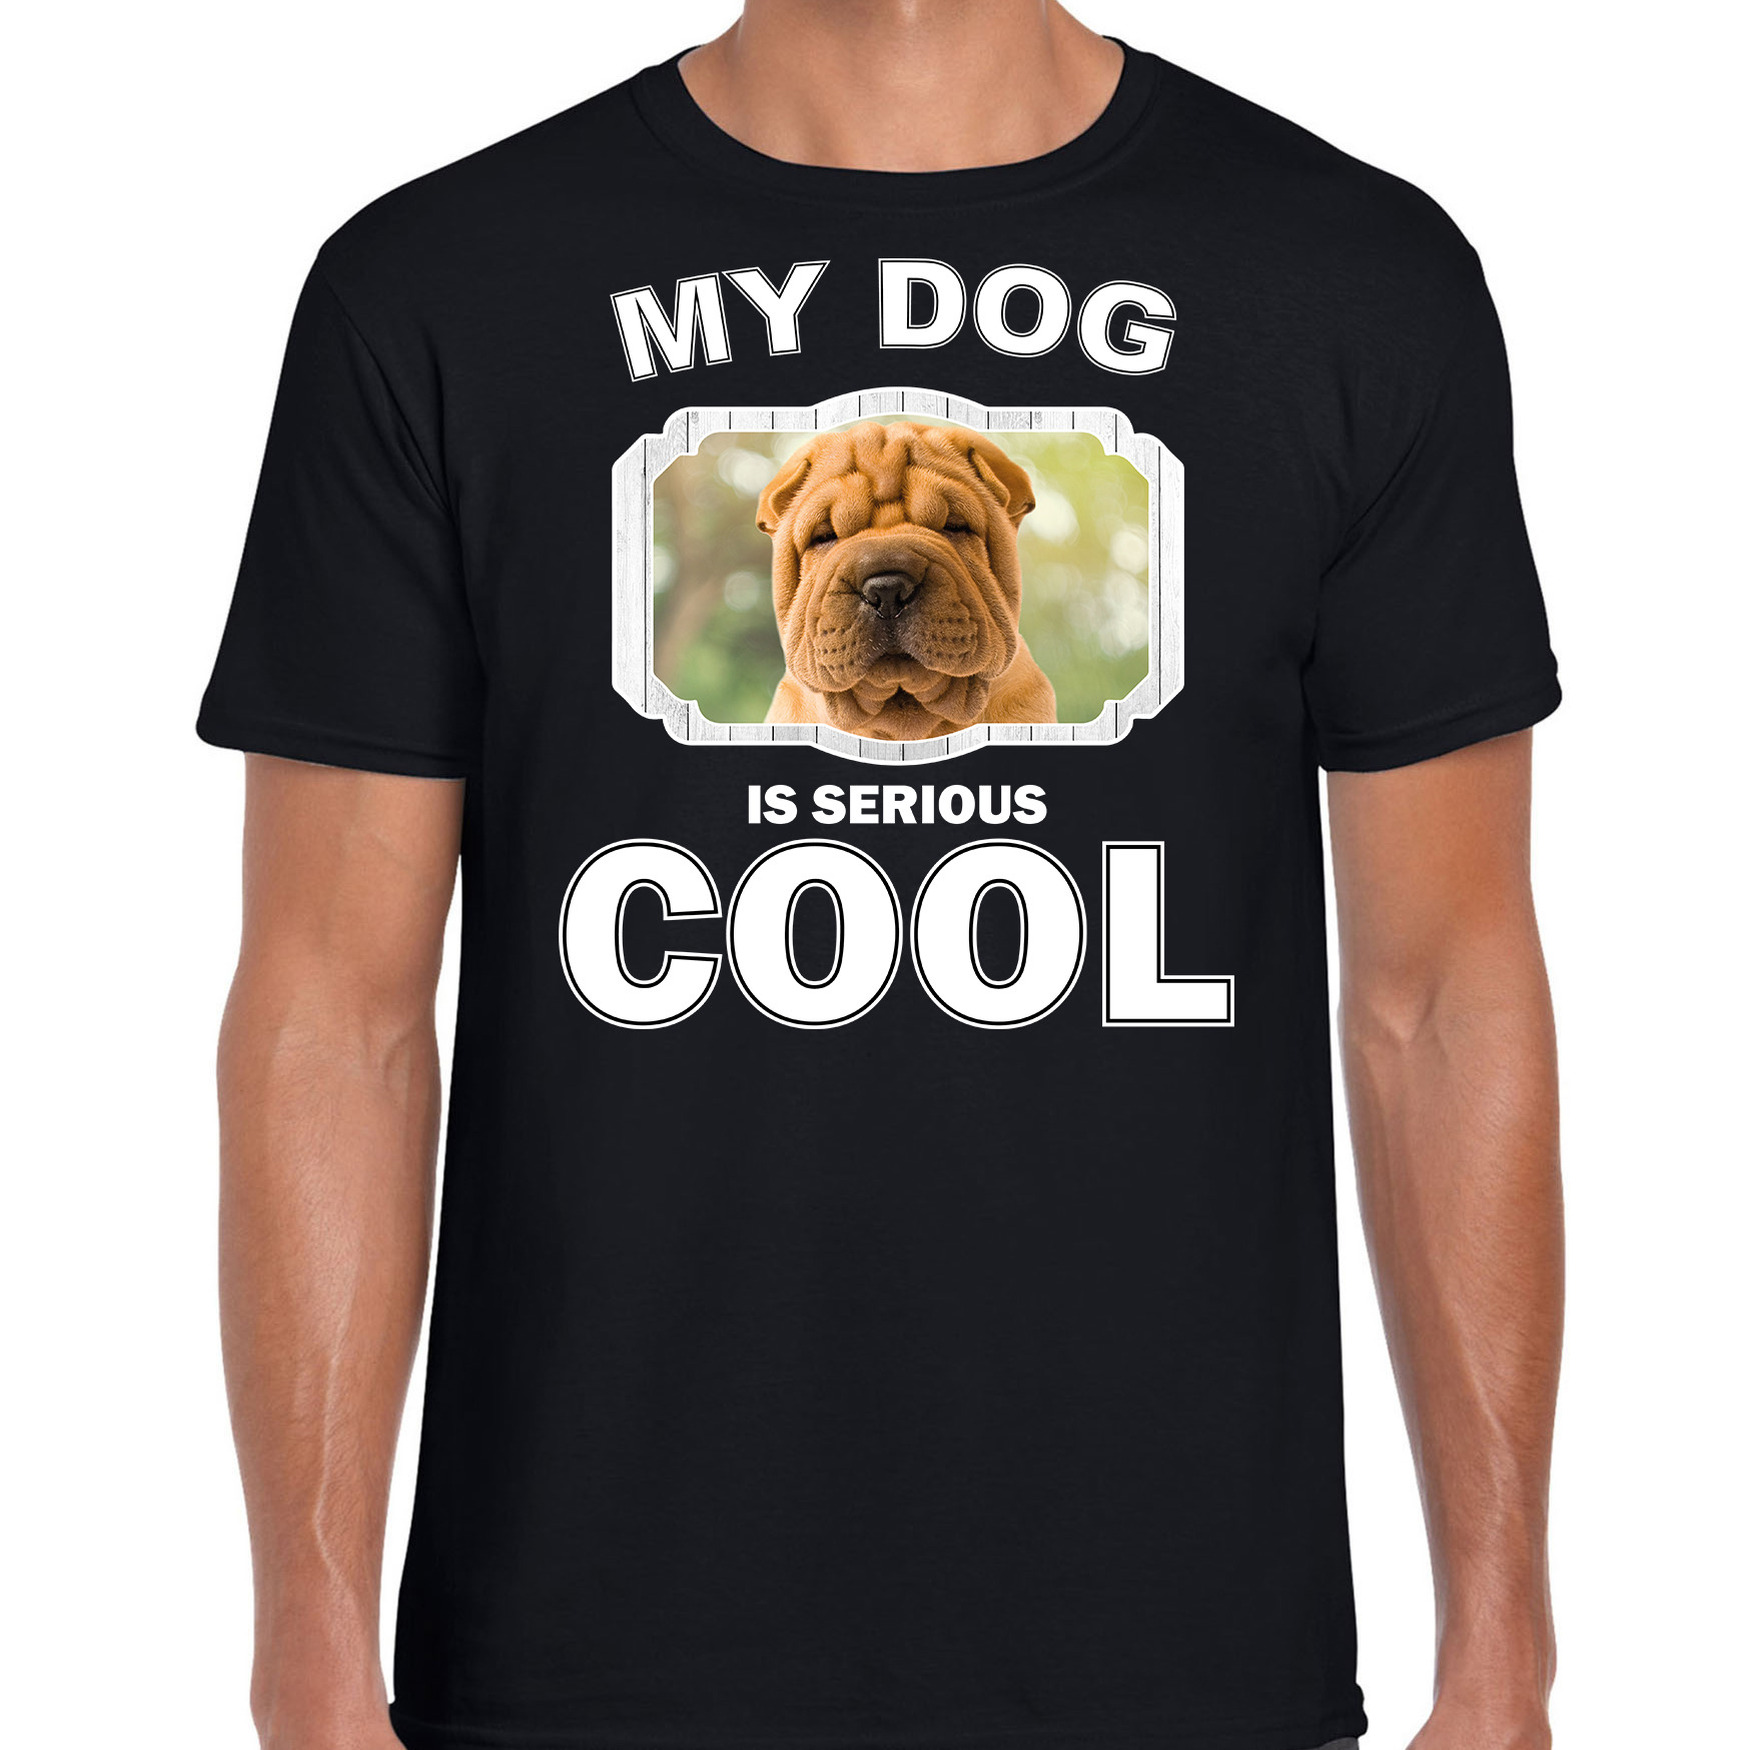 Shar pei honden t-shirt my dog is serious cool zwart voor heren